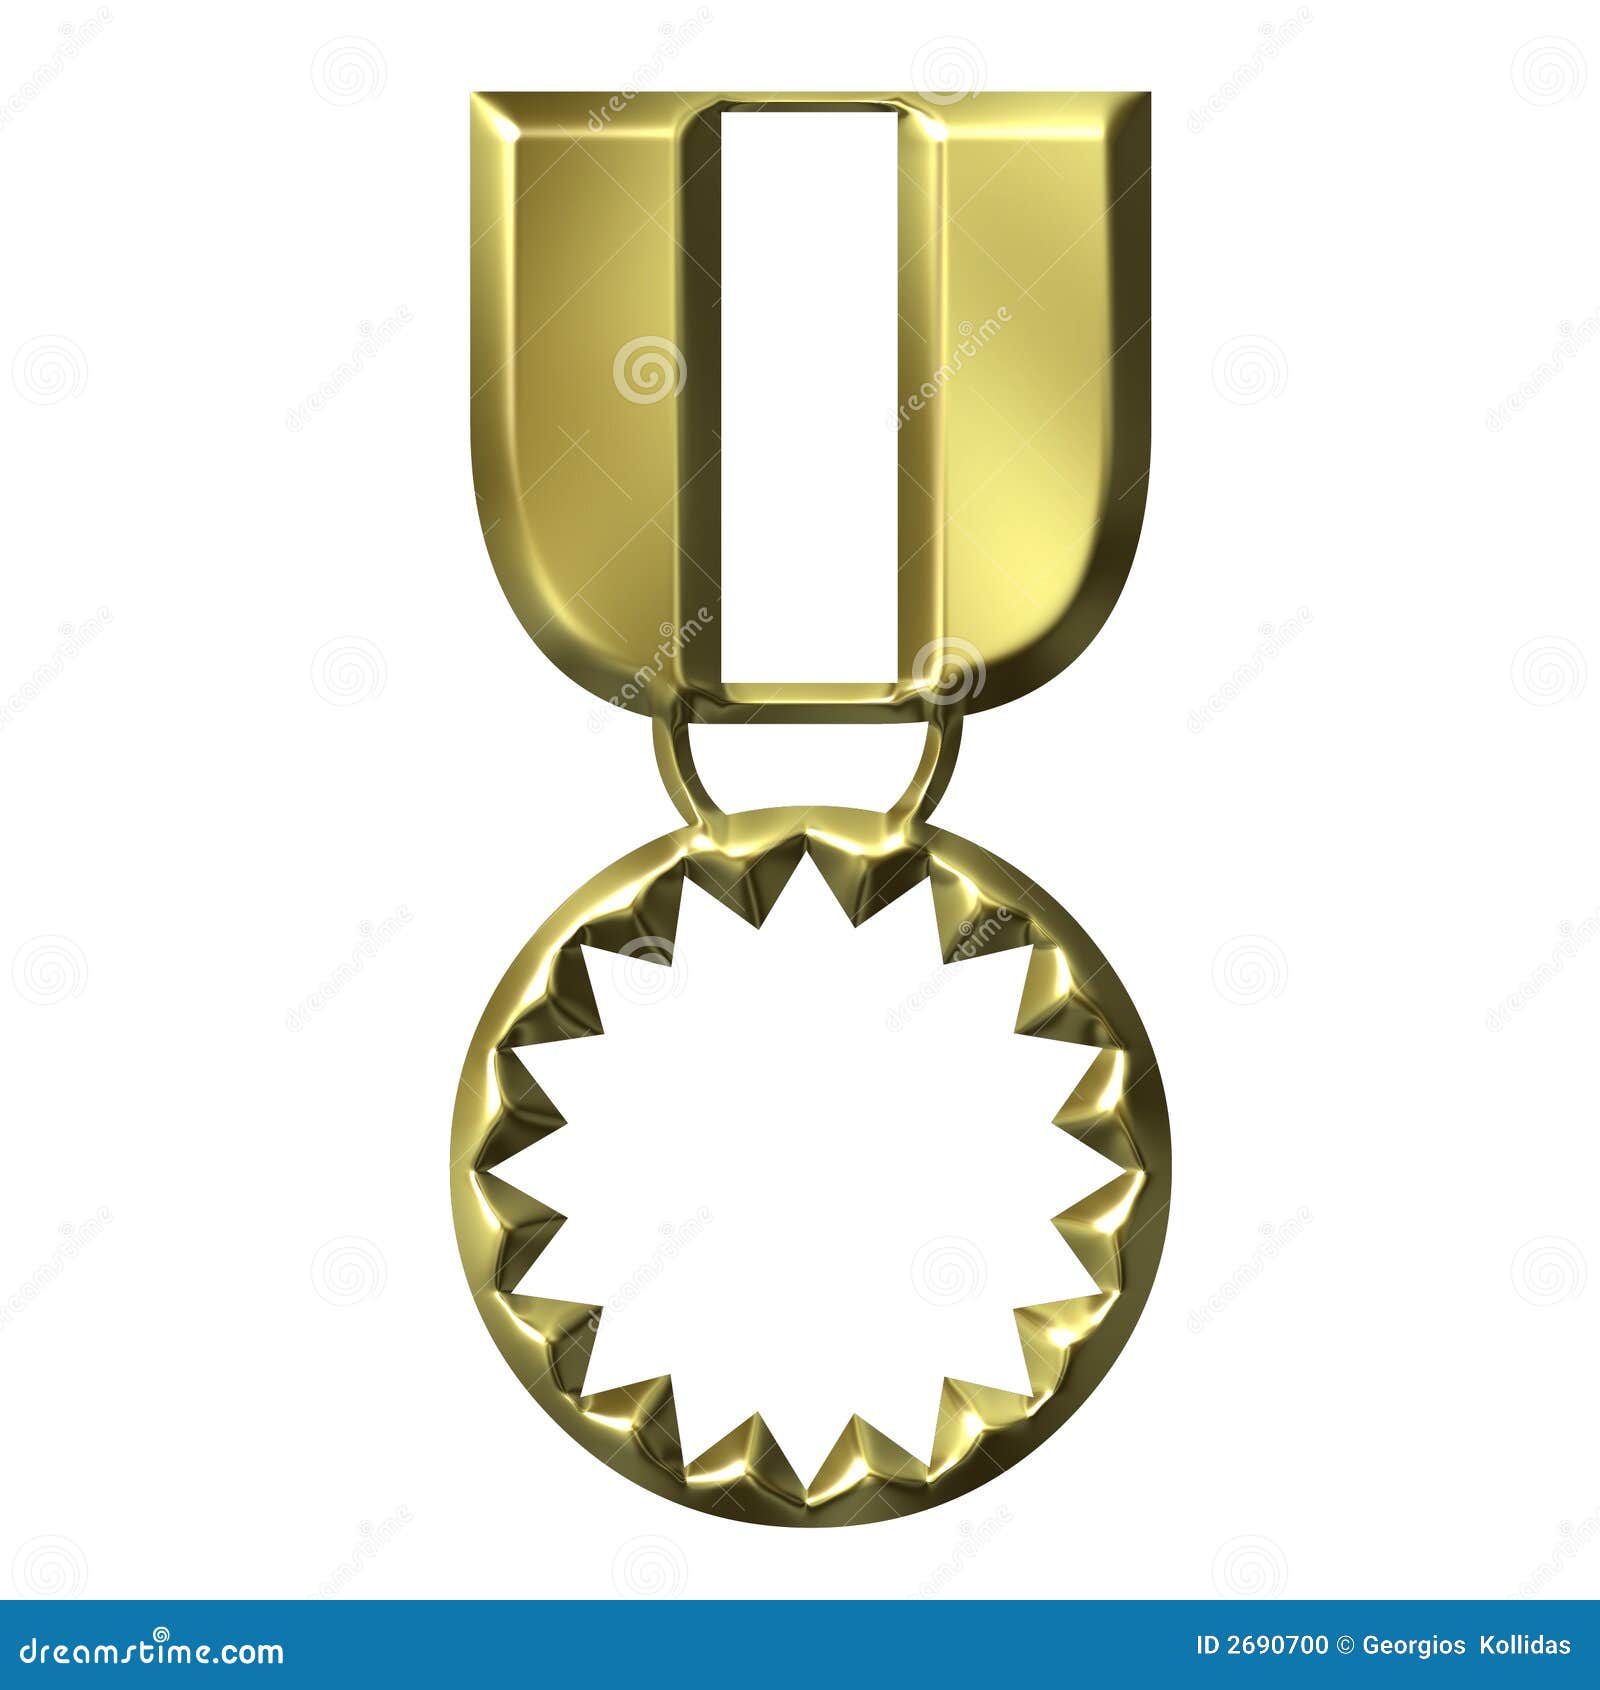 medal of honour